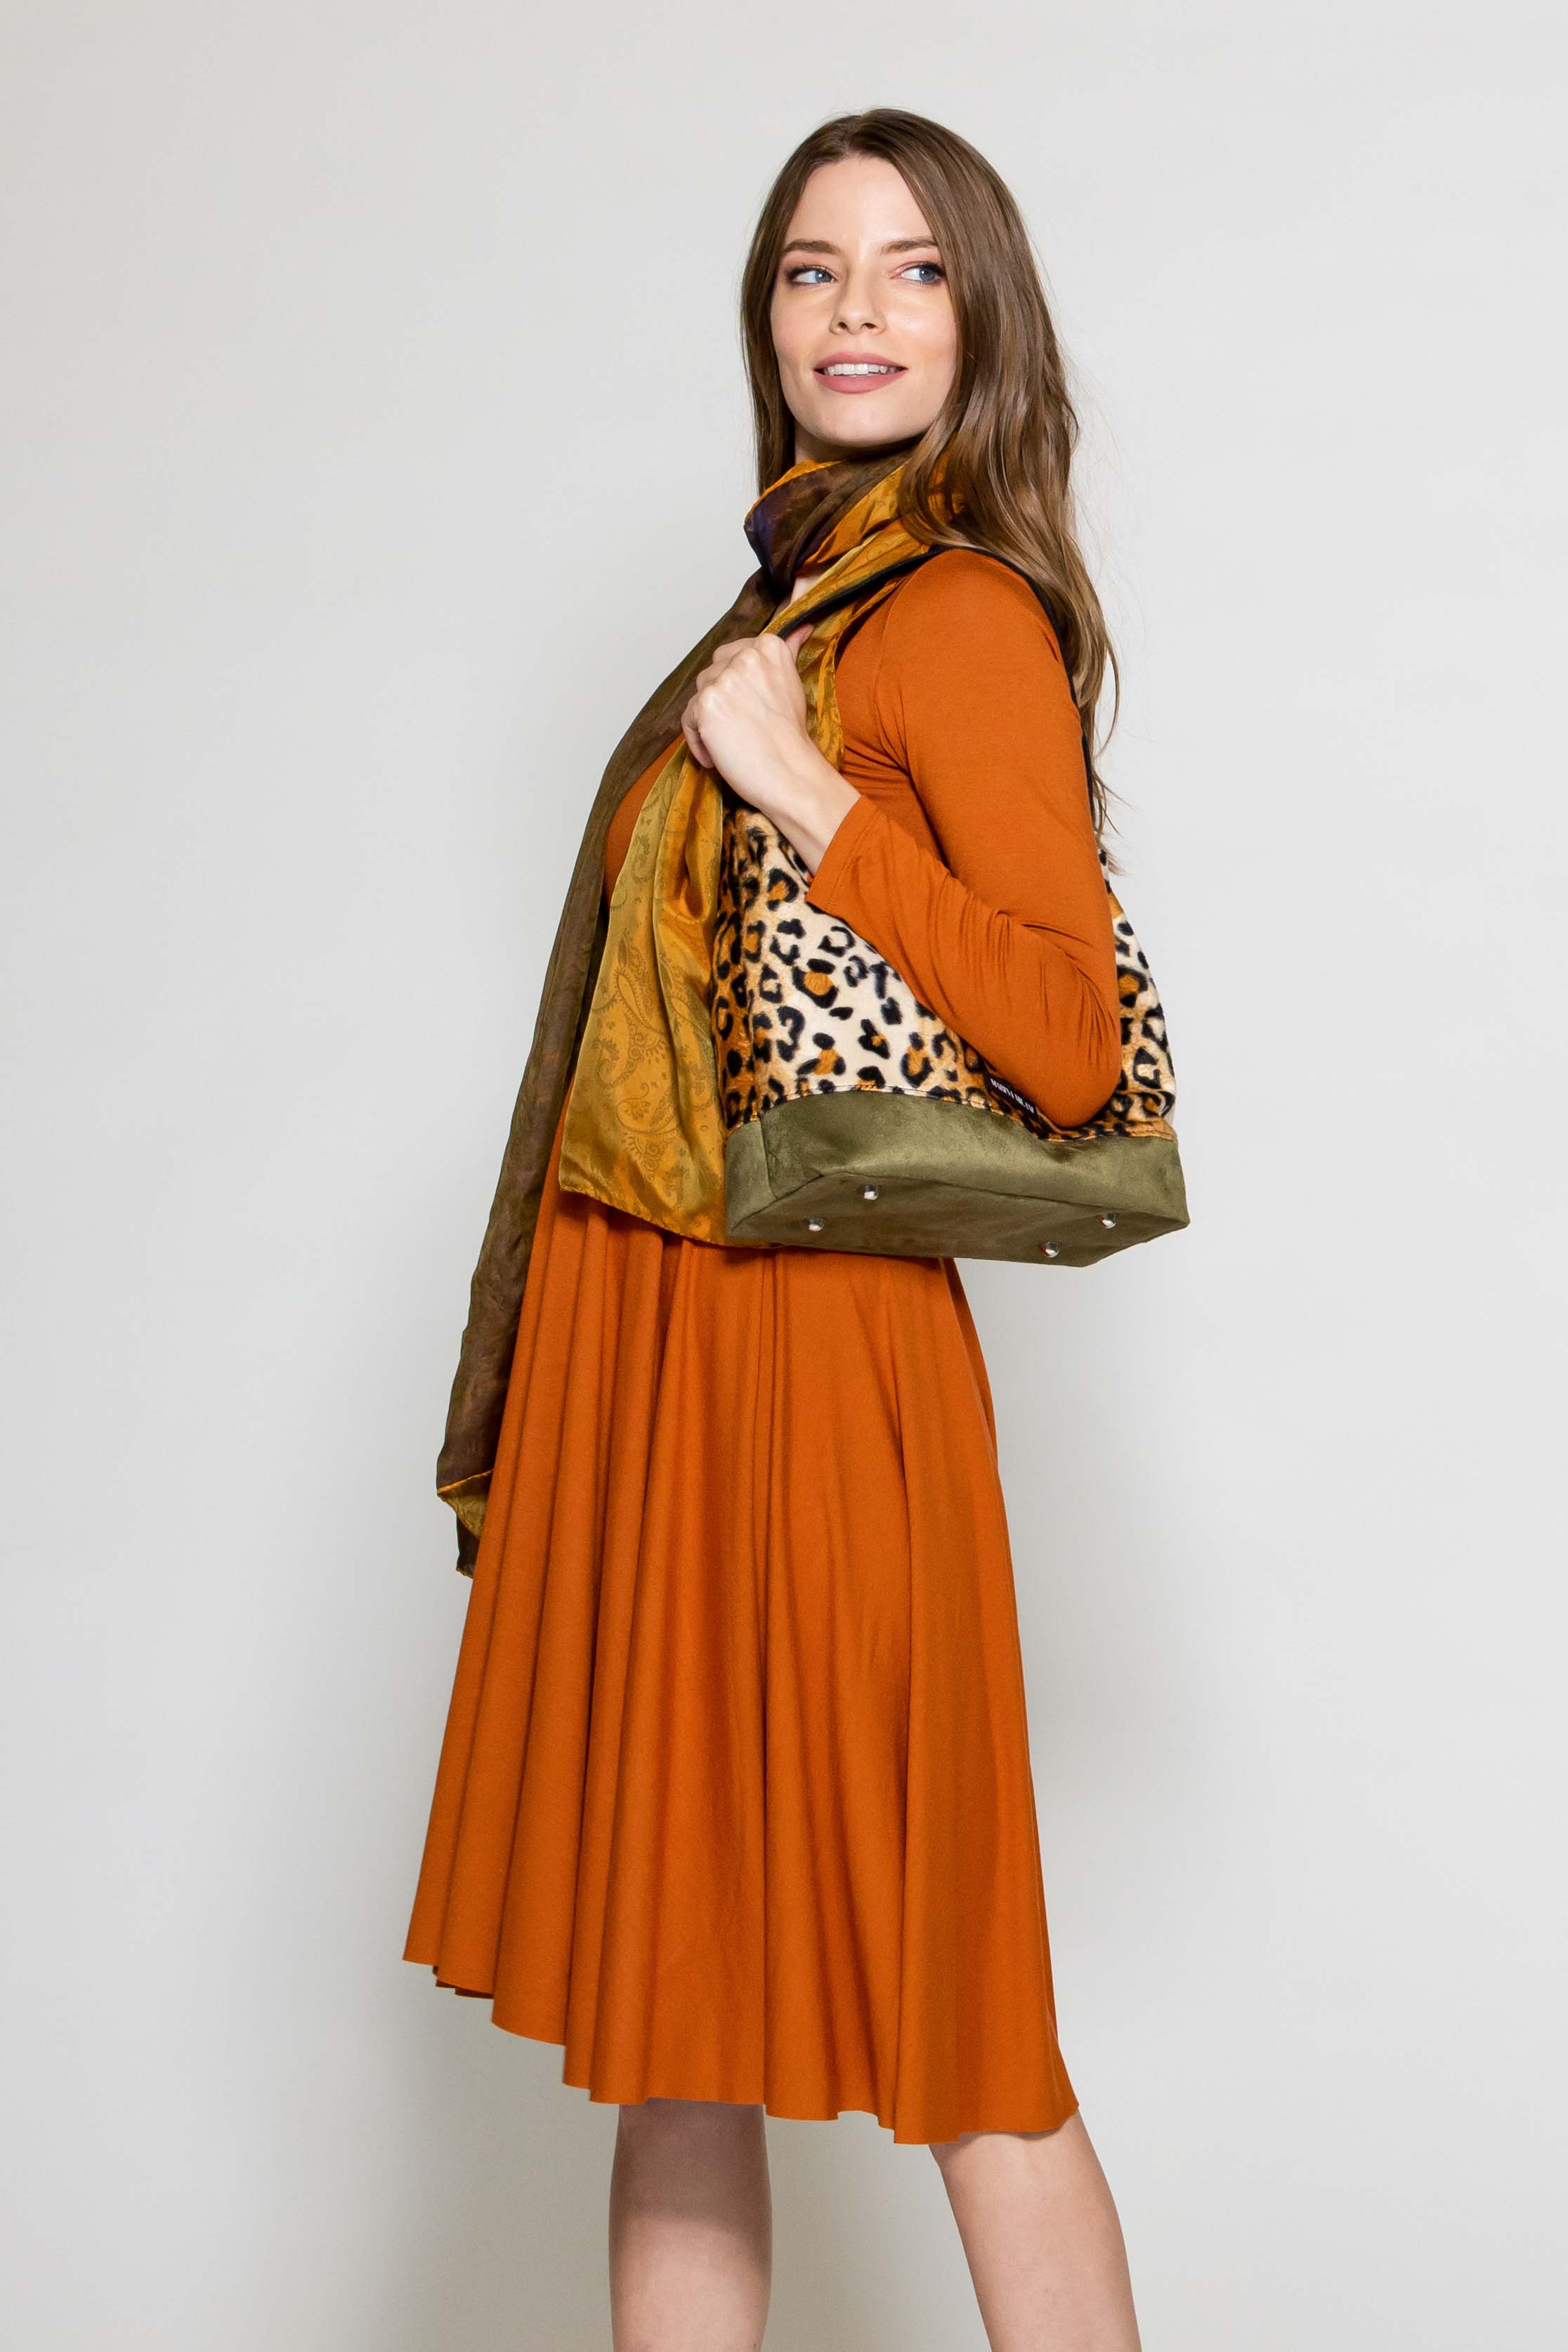 Marina Milani BAGS Camilla Vegan Leopard Printed Shoulder Bag